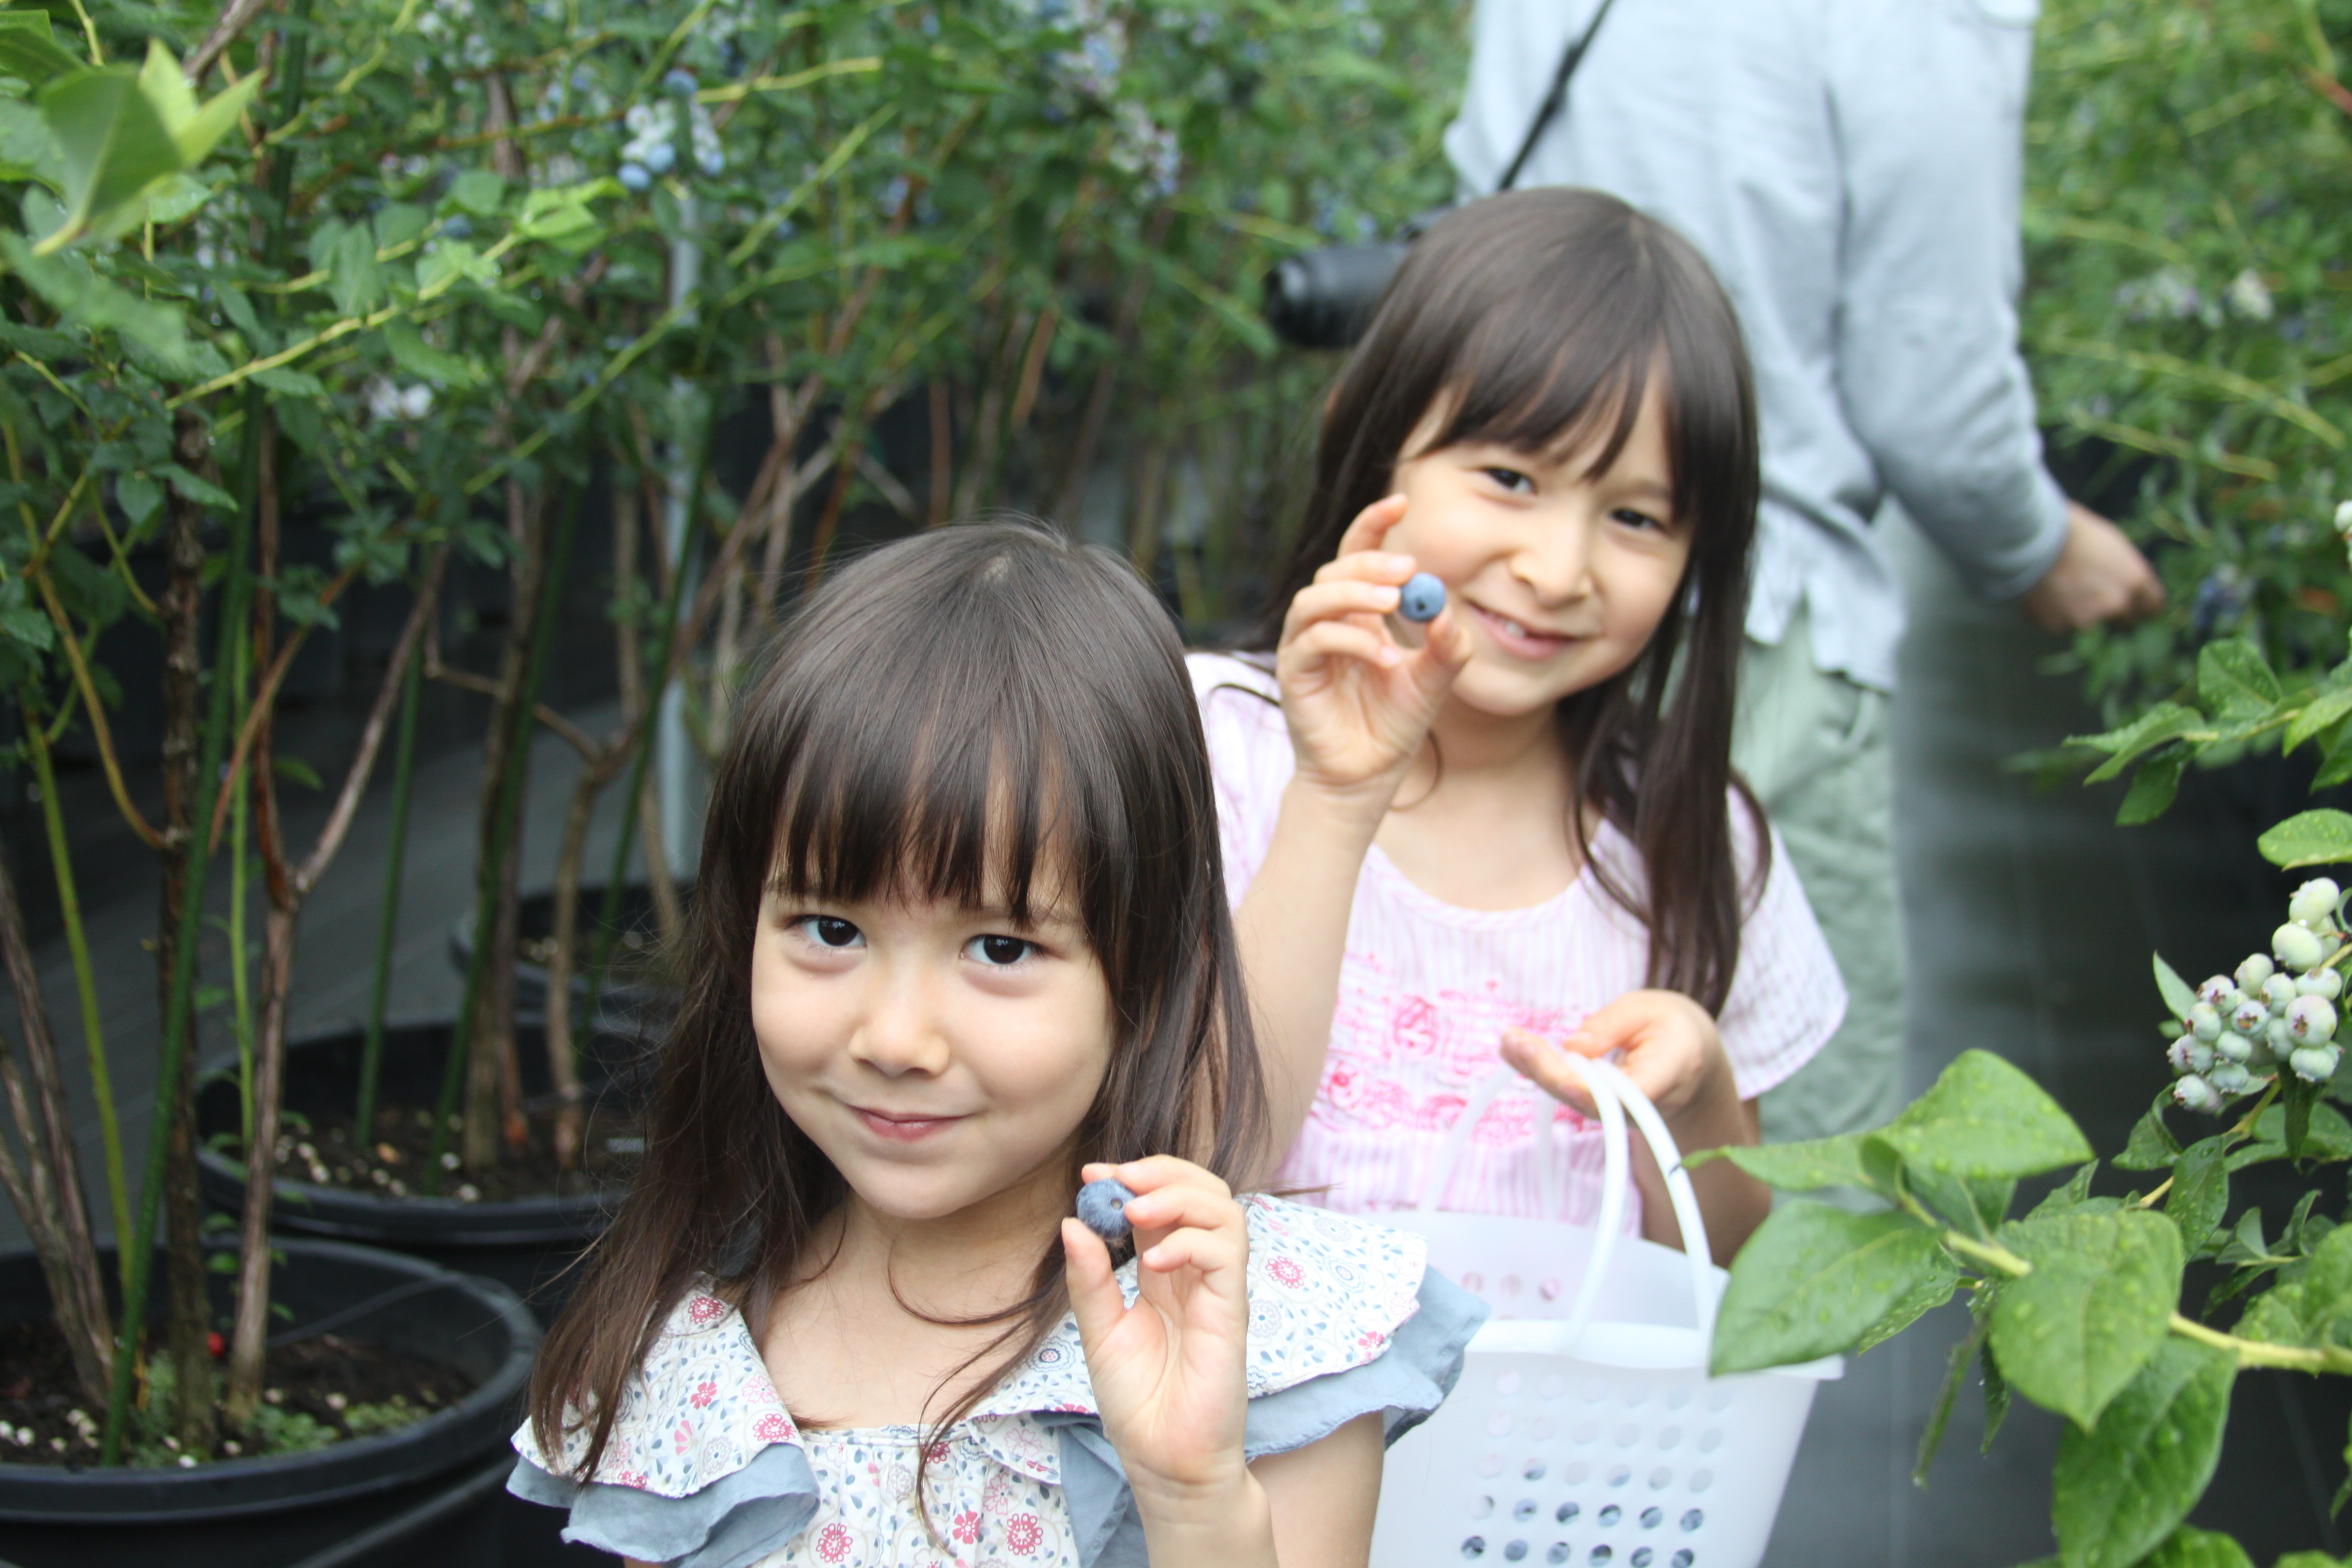 two girls picking blueberries